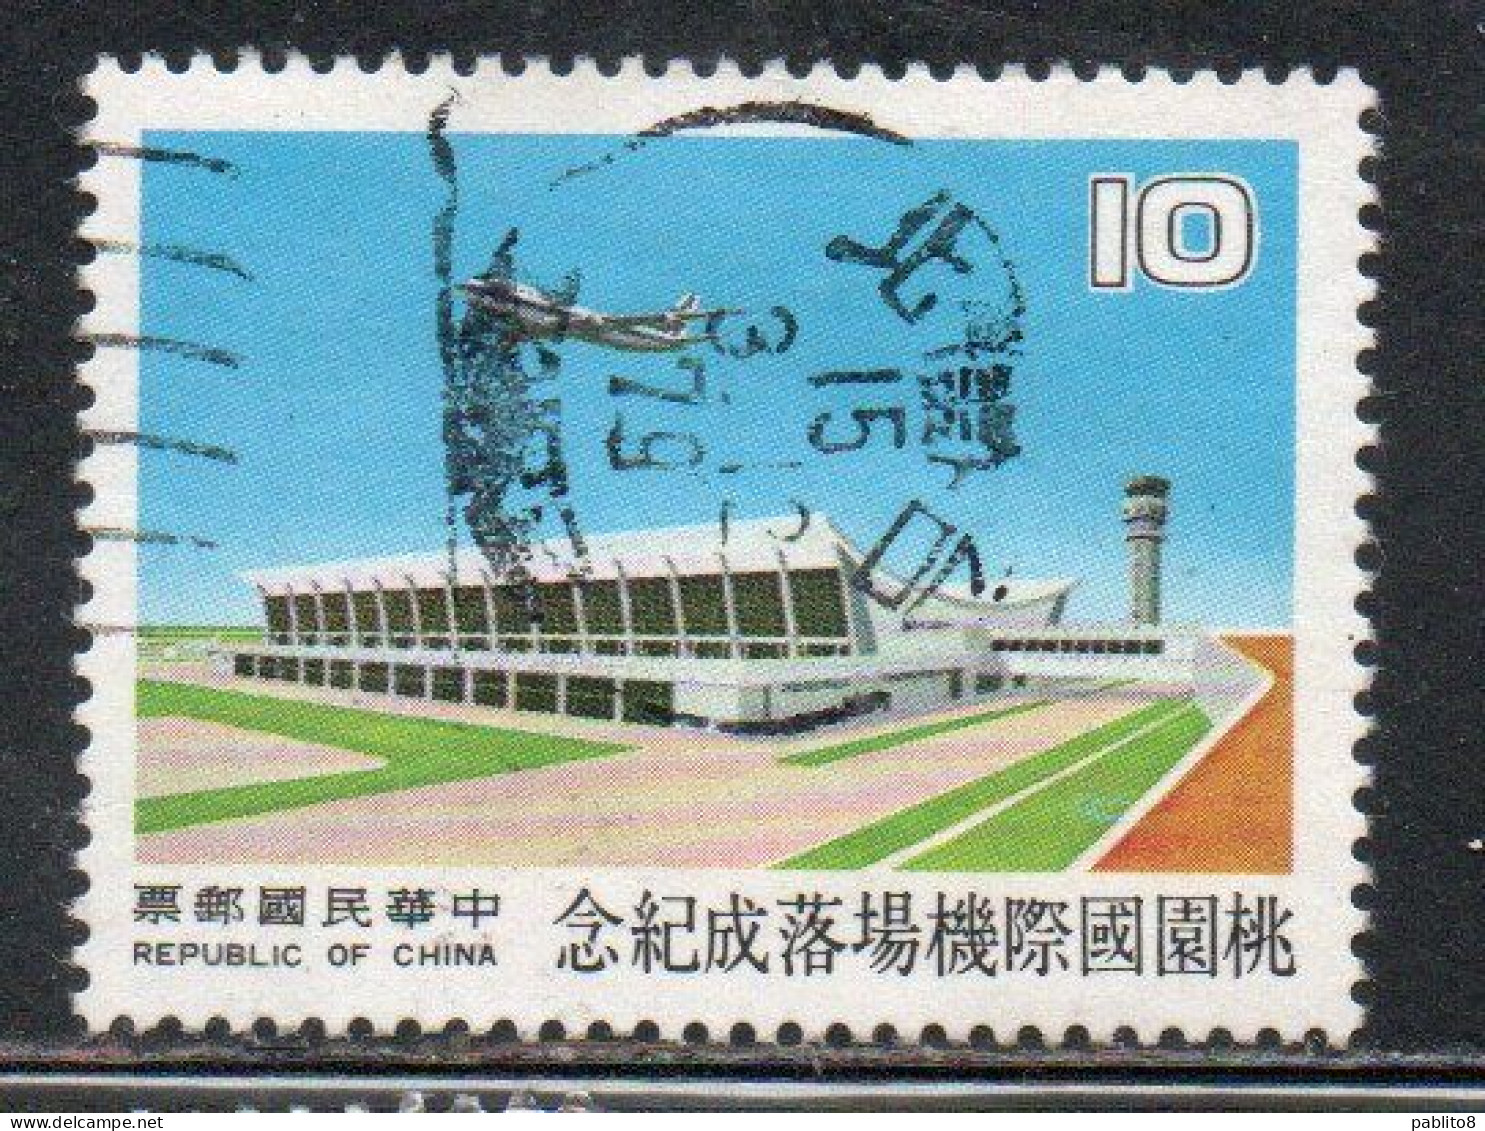 CHINA REPUBLIC CINA TAIWAN FORMOSA 1978 TAOYUAN AIRPORT PASSENGER TERMINAL CONTROL TOWER 10$ USED USATO OBLITERE - Usados